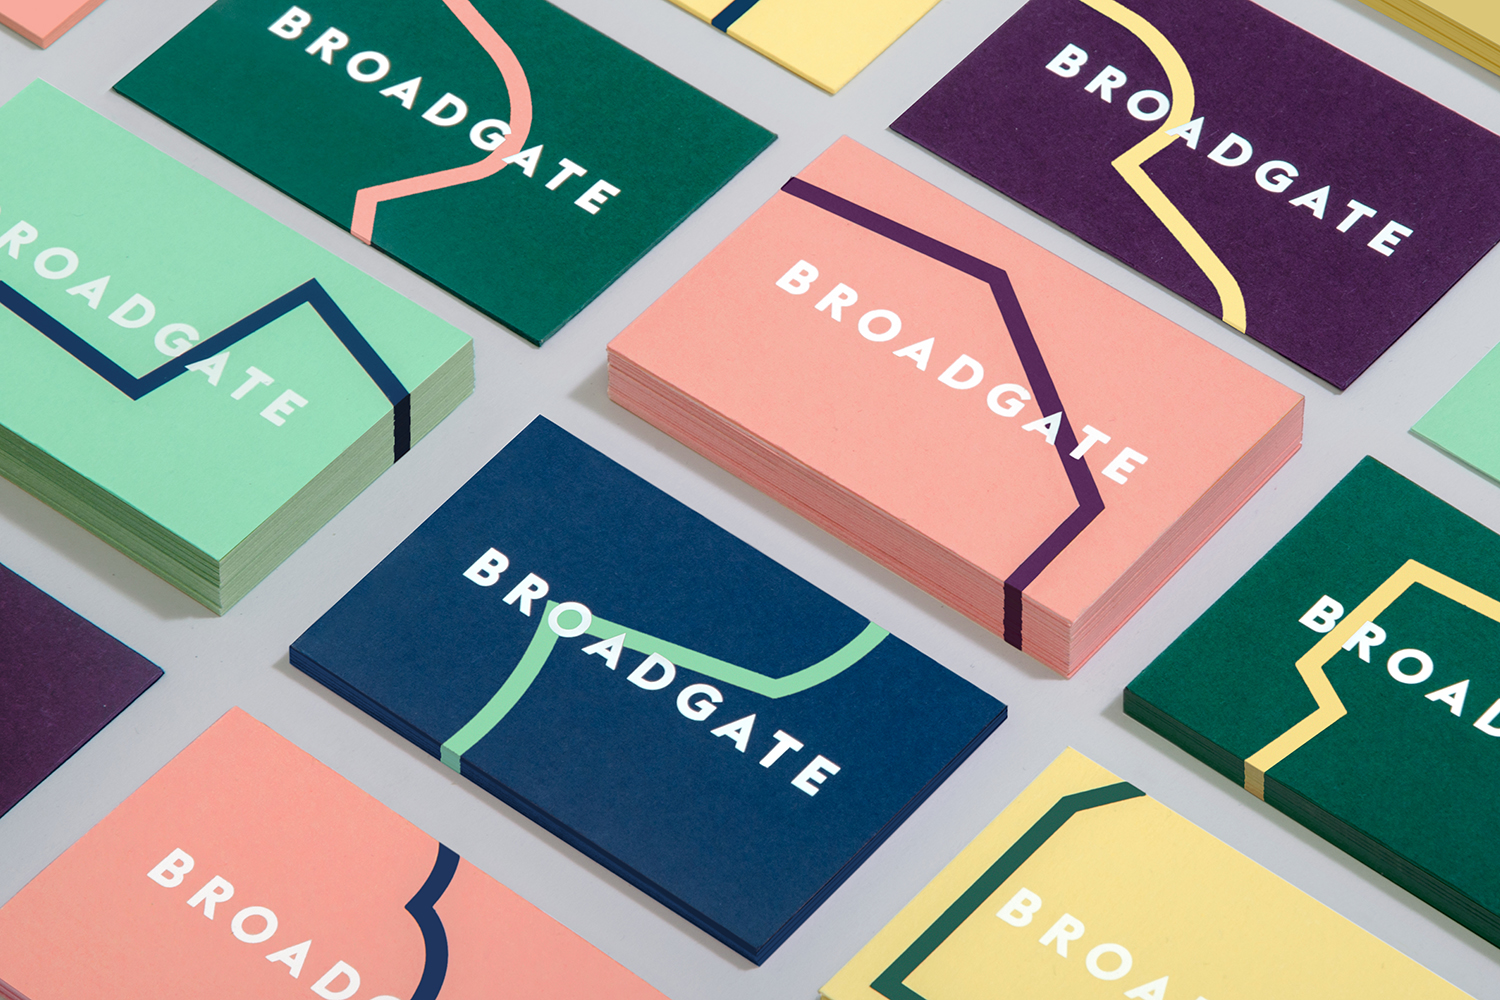 British Design – Broadgate by dn&co, London